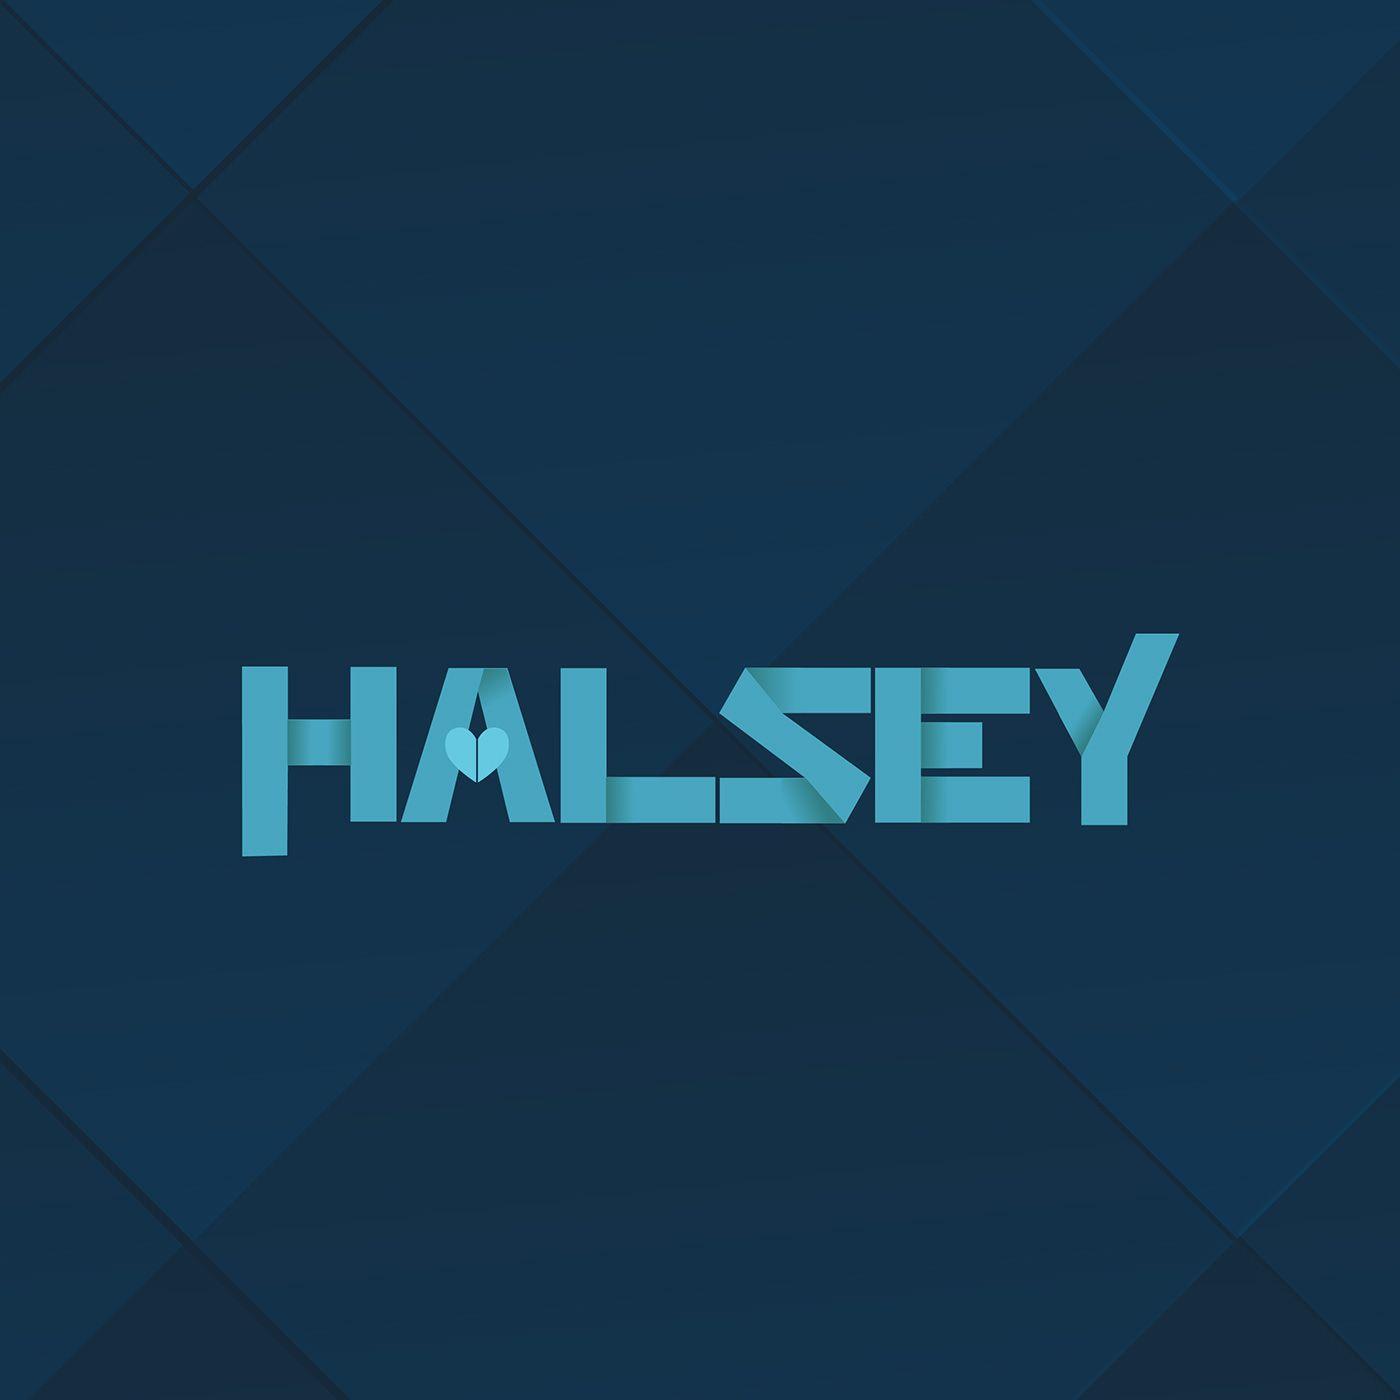 Halsey Logo - Halsey Logo Concept on Behance